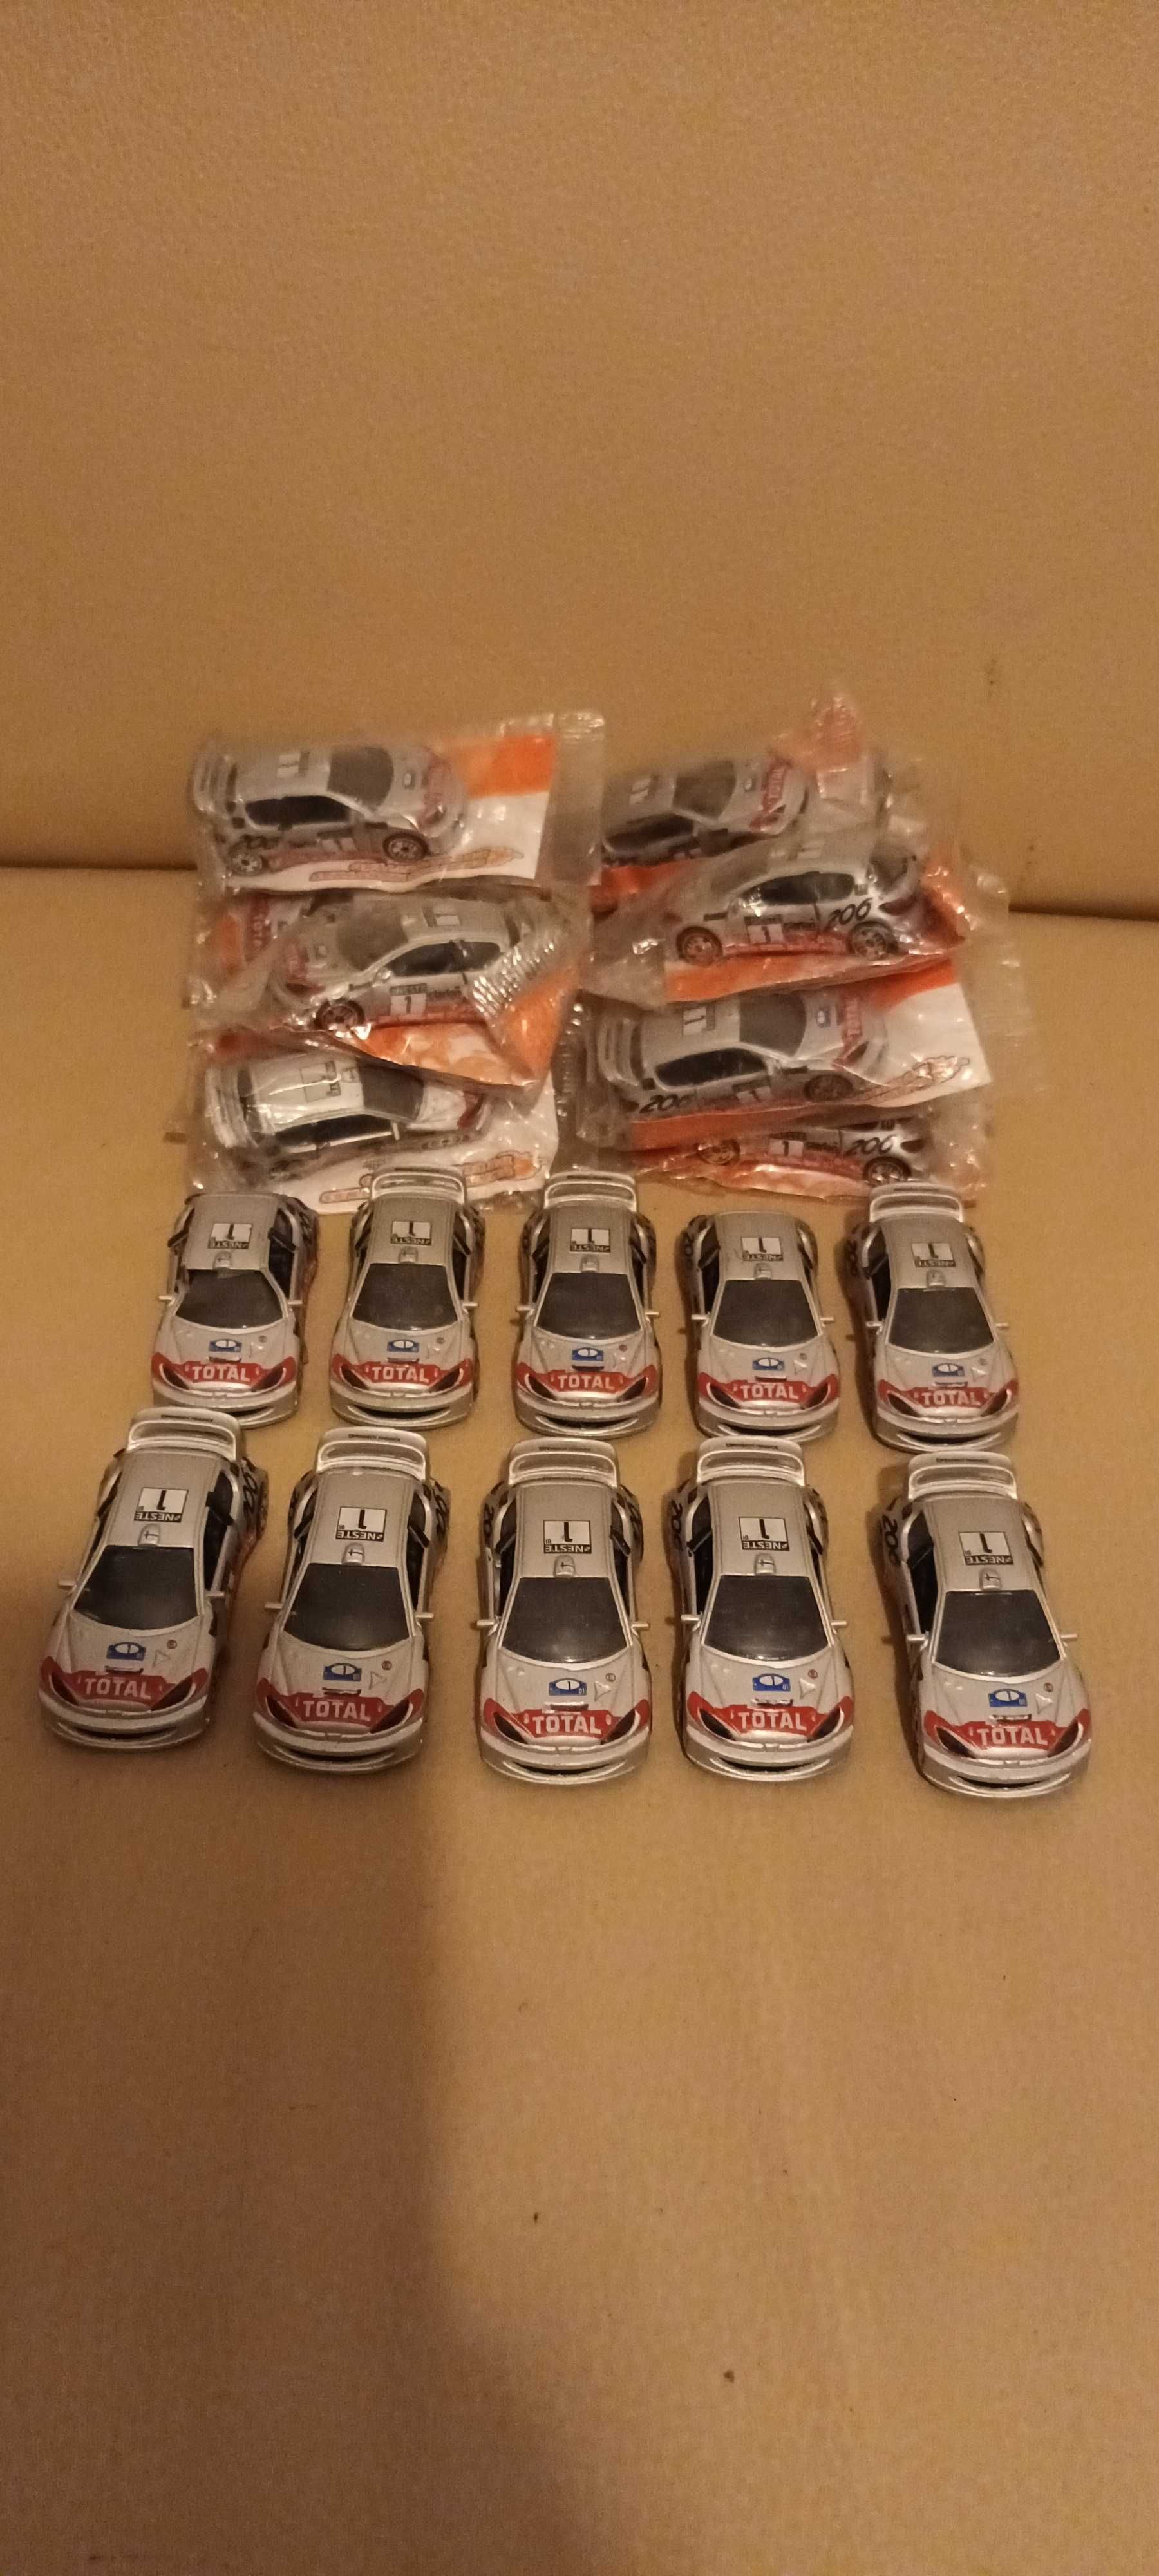 Miniaturas de Peugeot 206 Rally e outros